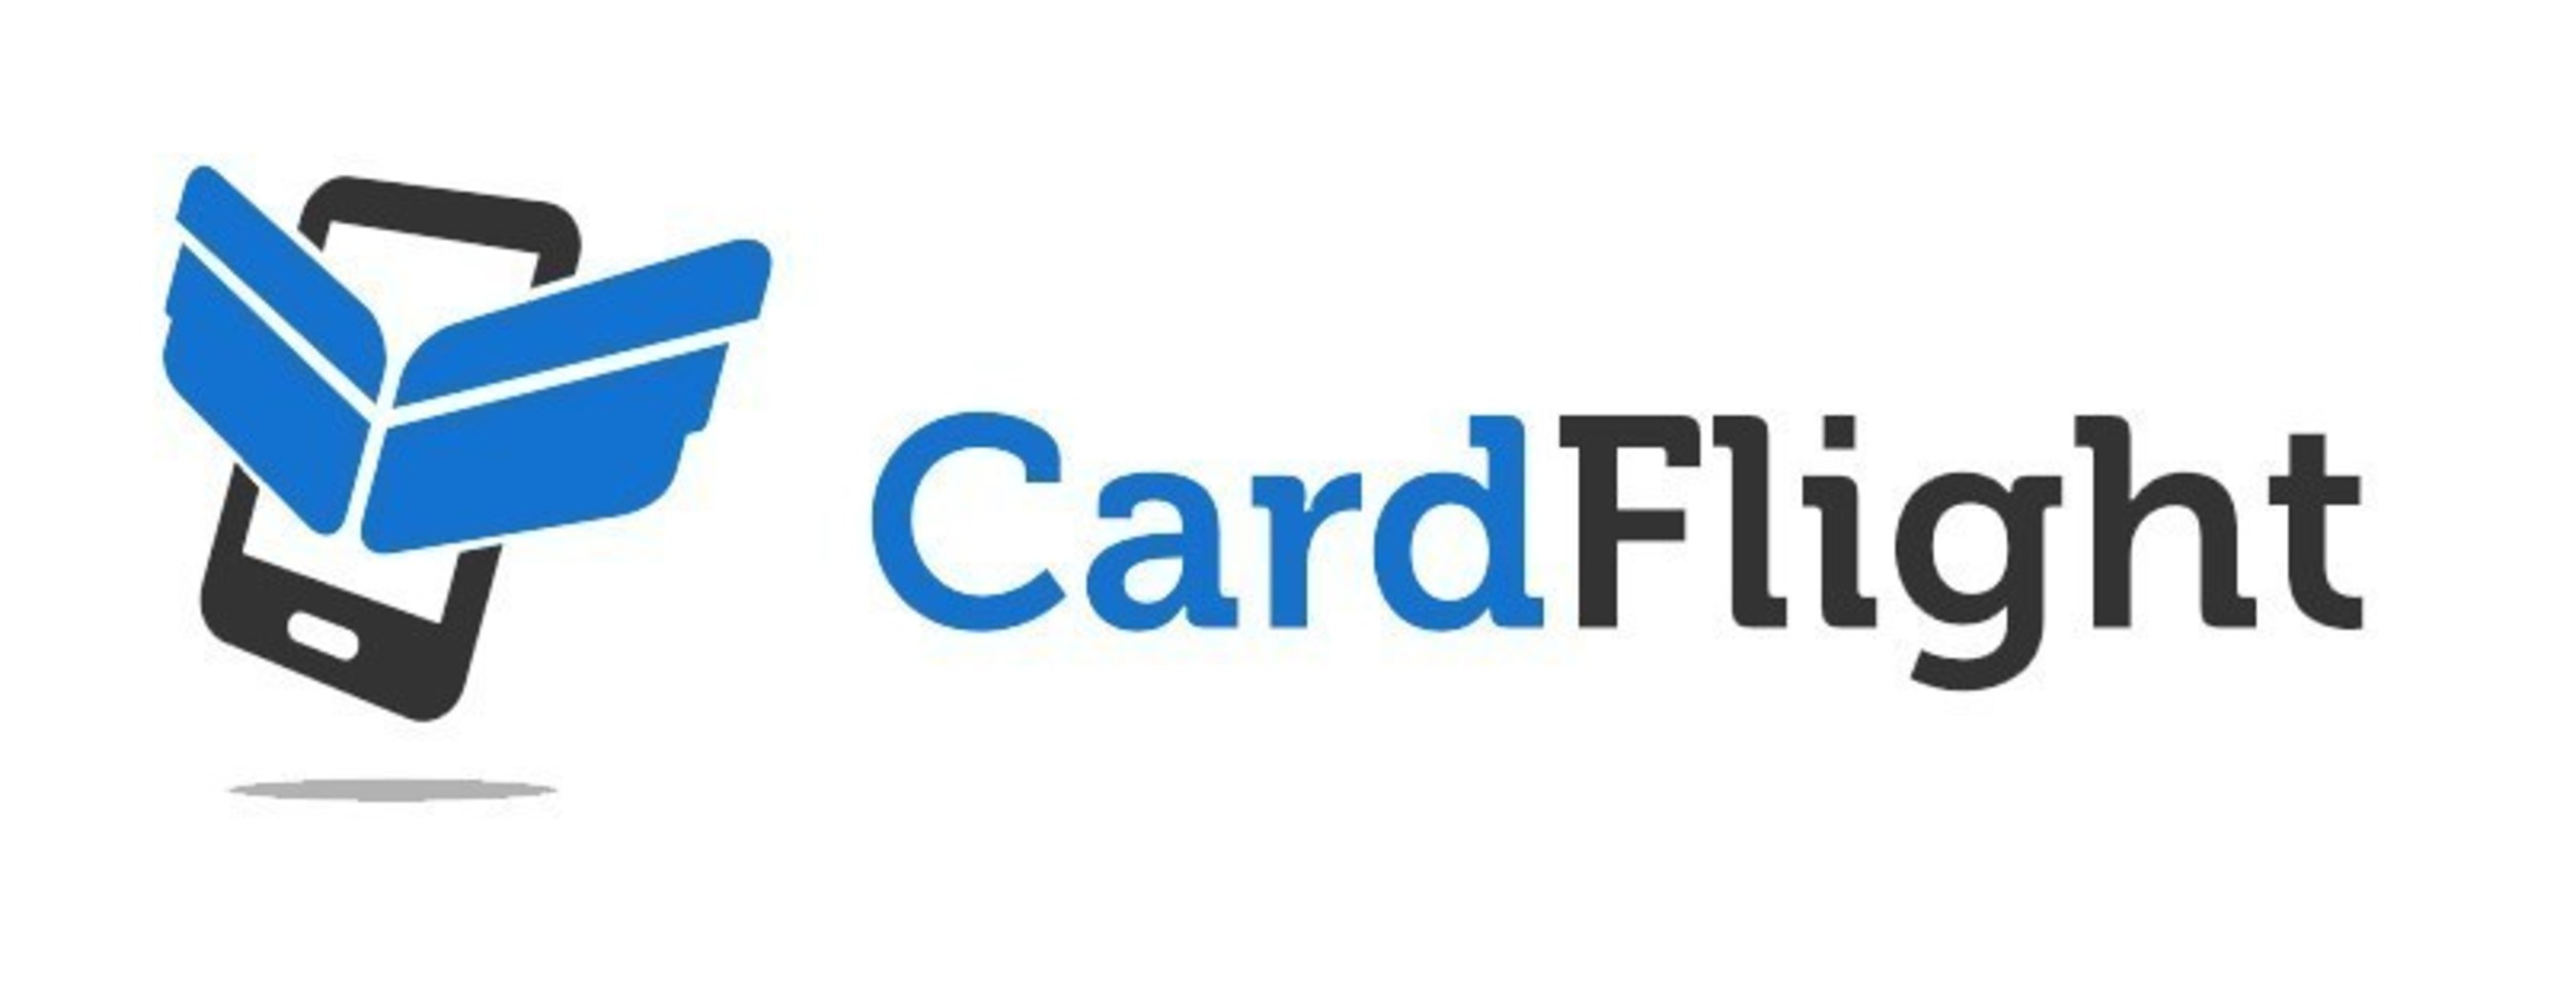 CardFlight _1_ Logo